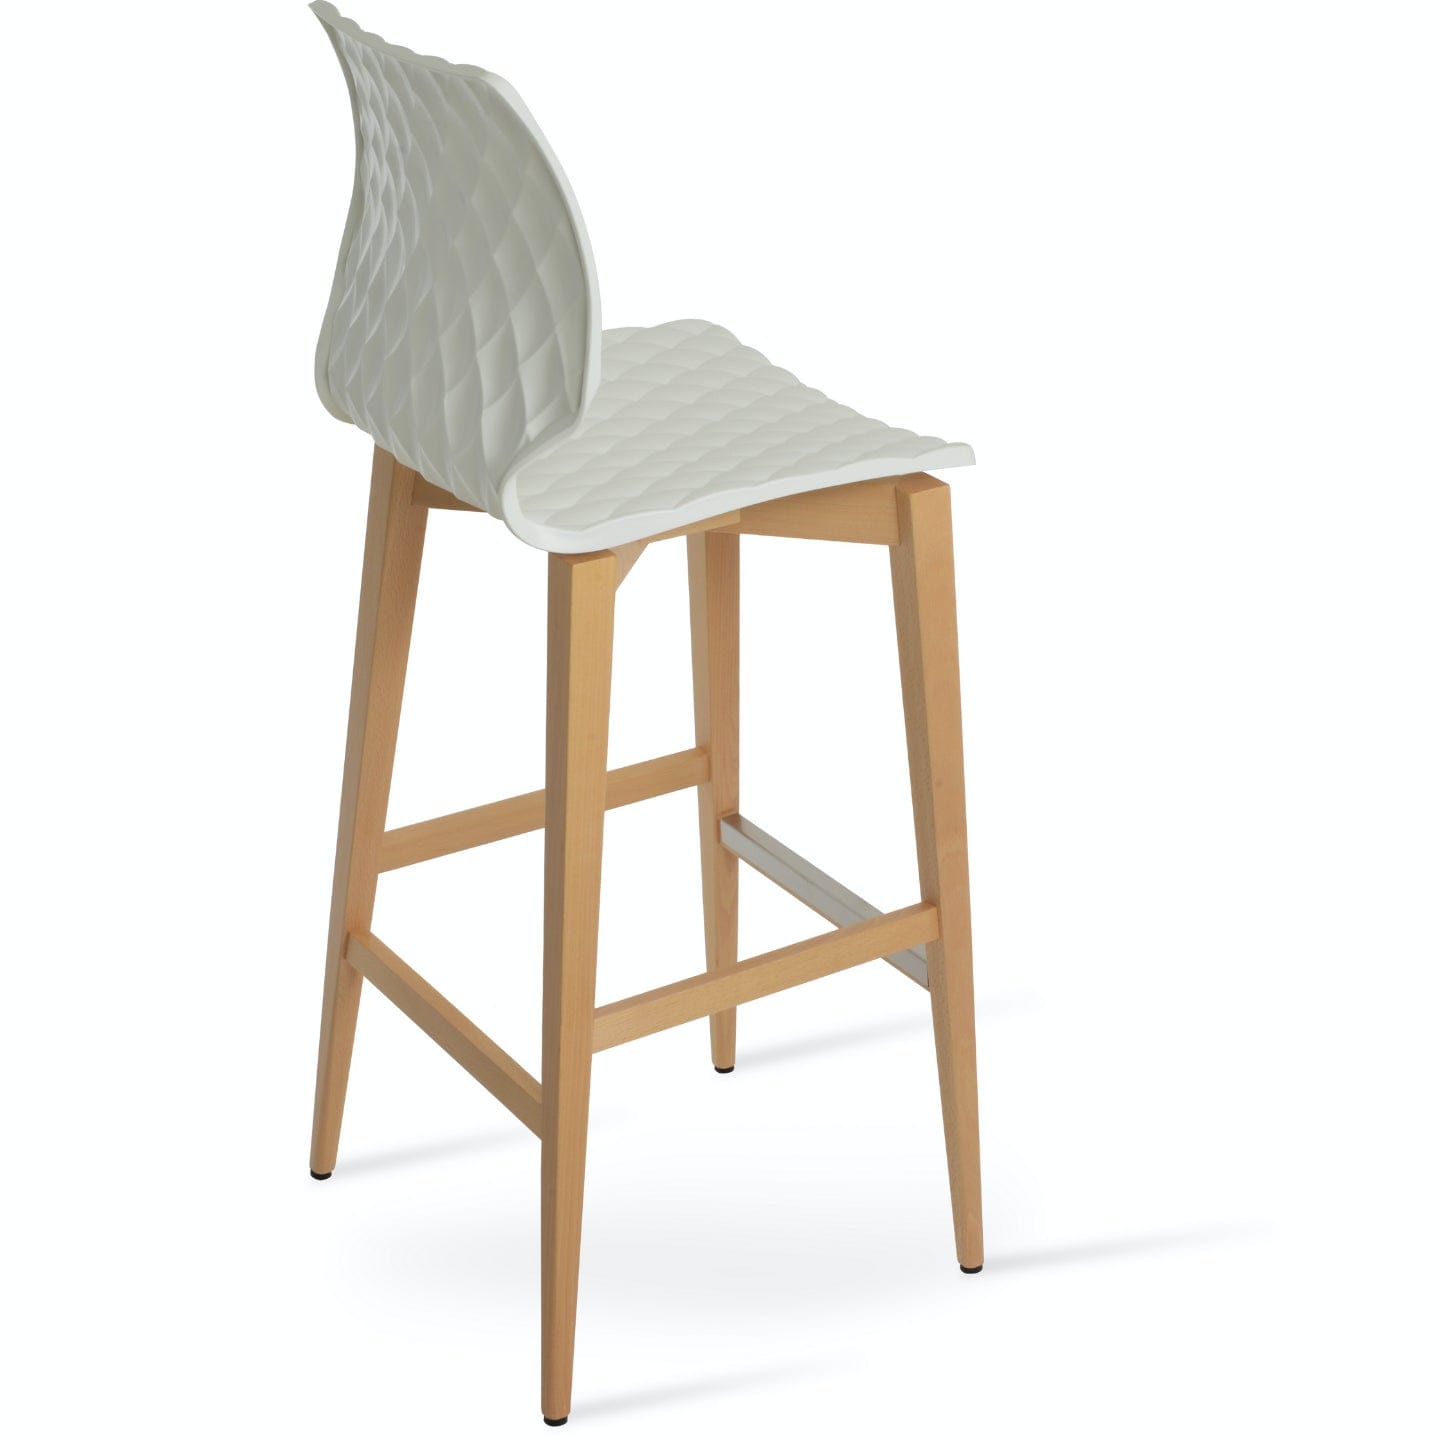 Soho Concept unika-386-industrial-natural-wood-base-polypropylene-seat-kitchen-counter-stool-in-white